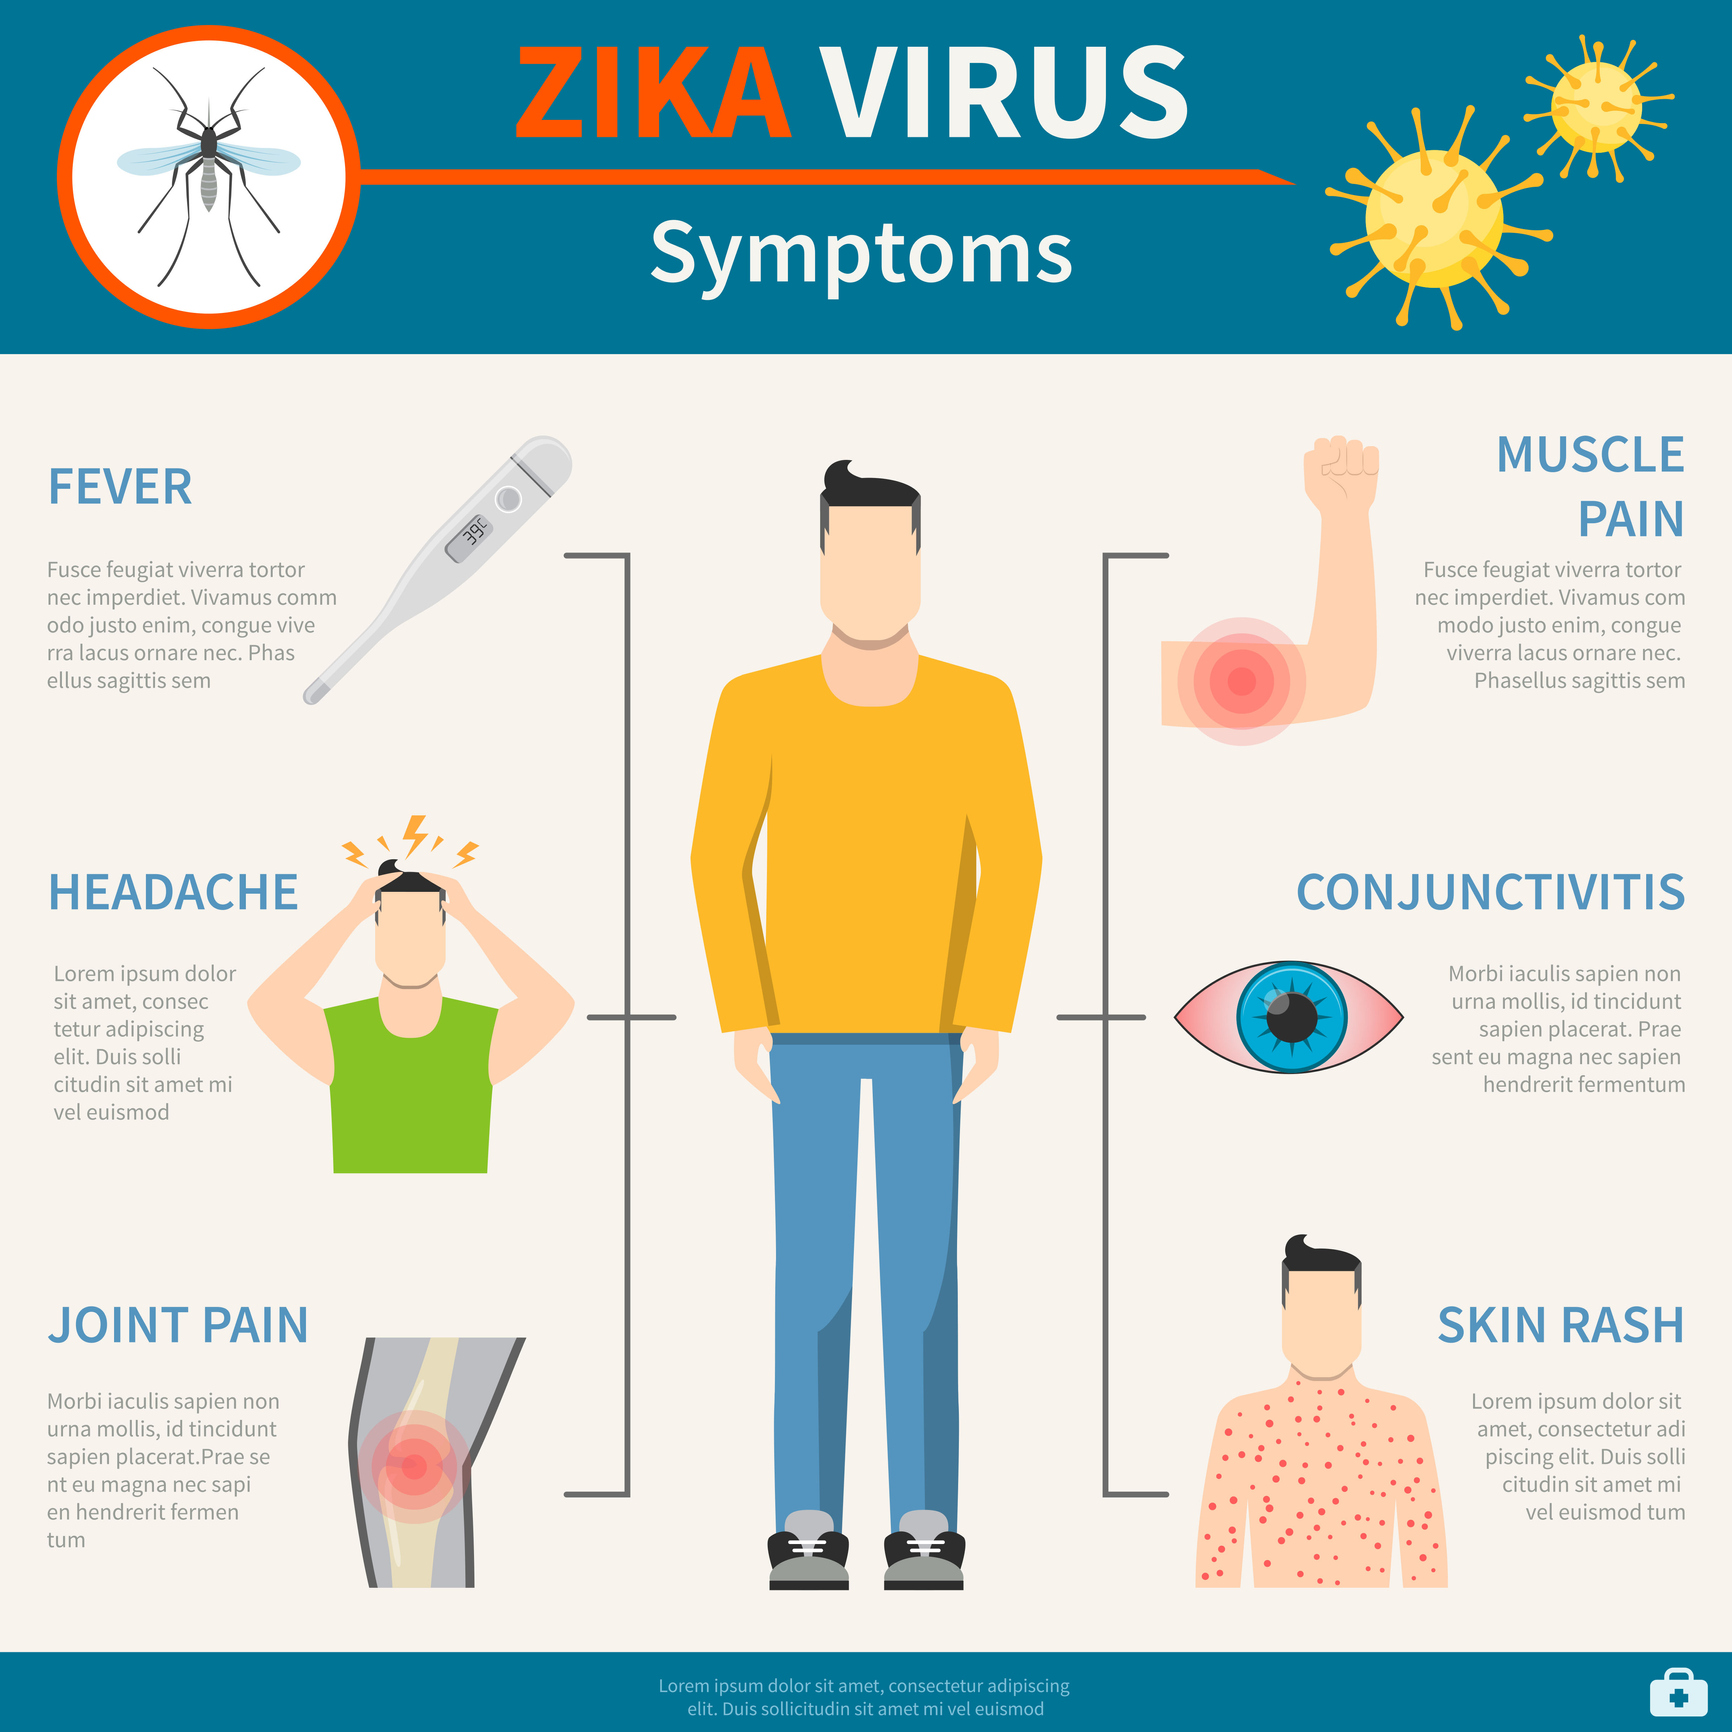 Symptoms of Zika virus infection